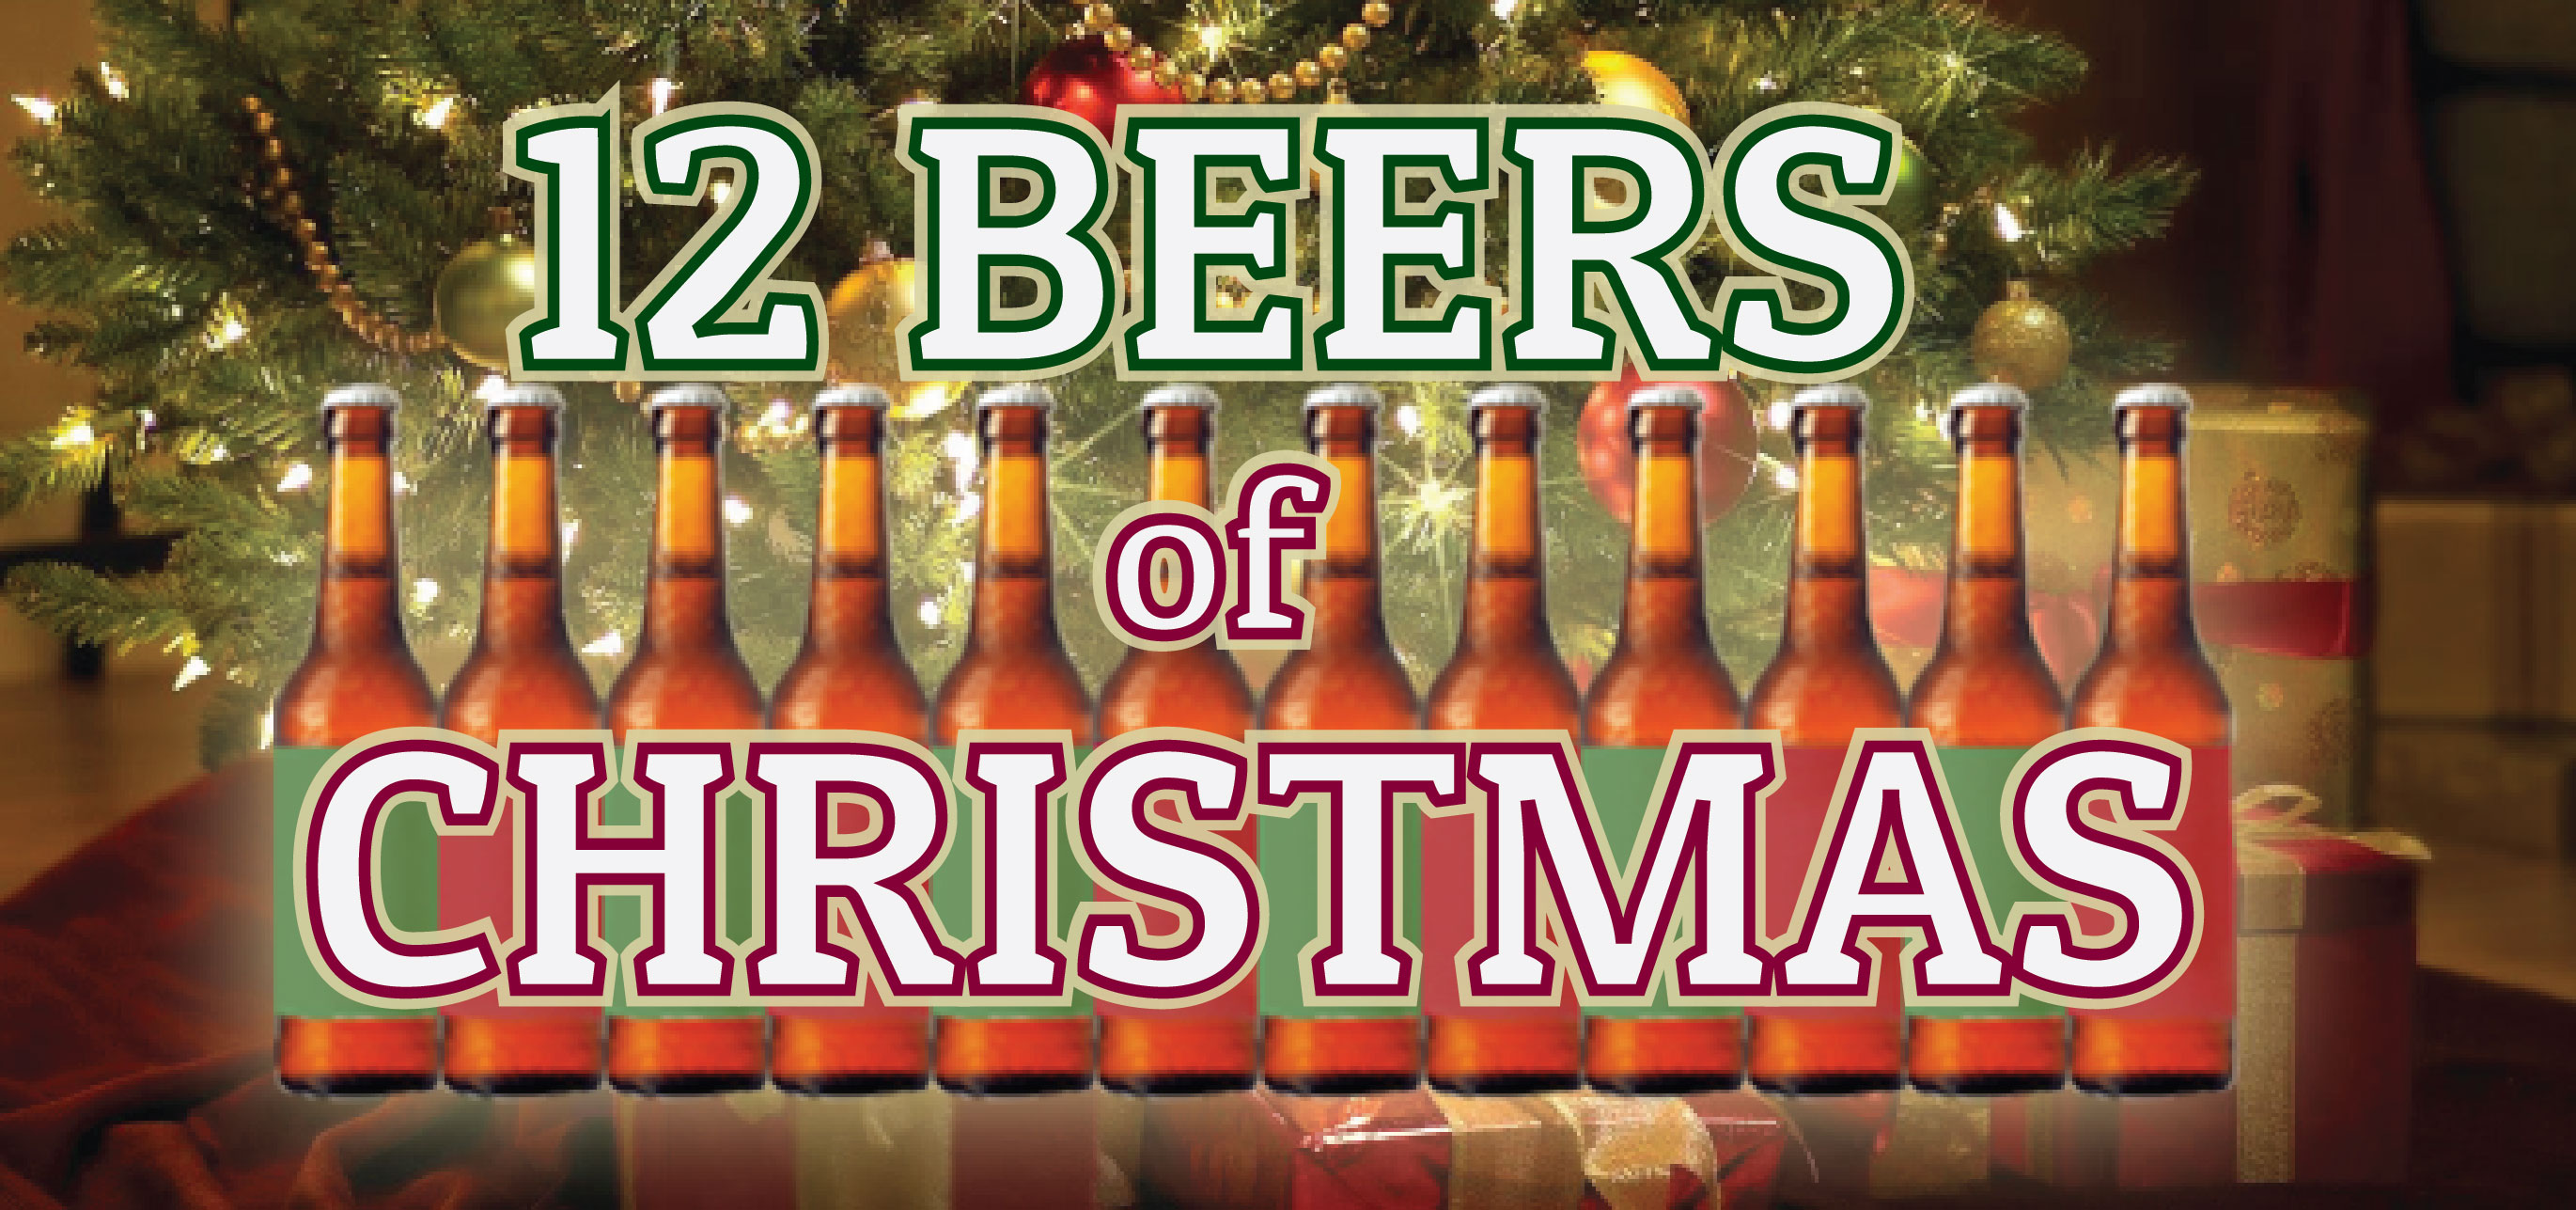 12 Beers of Christmas Day 11 | Prairie Christmas BOMB!